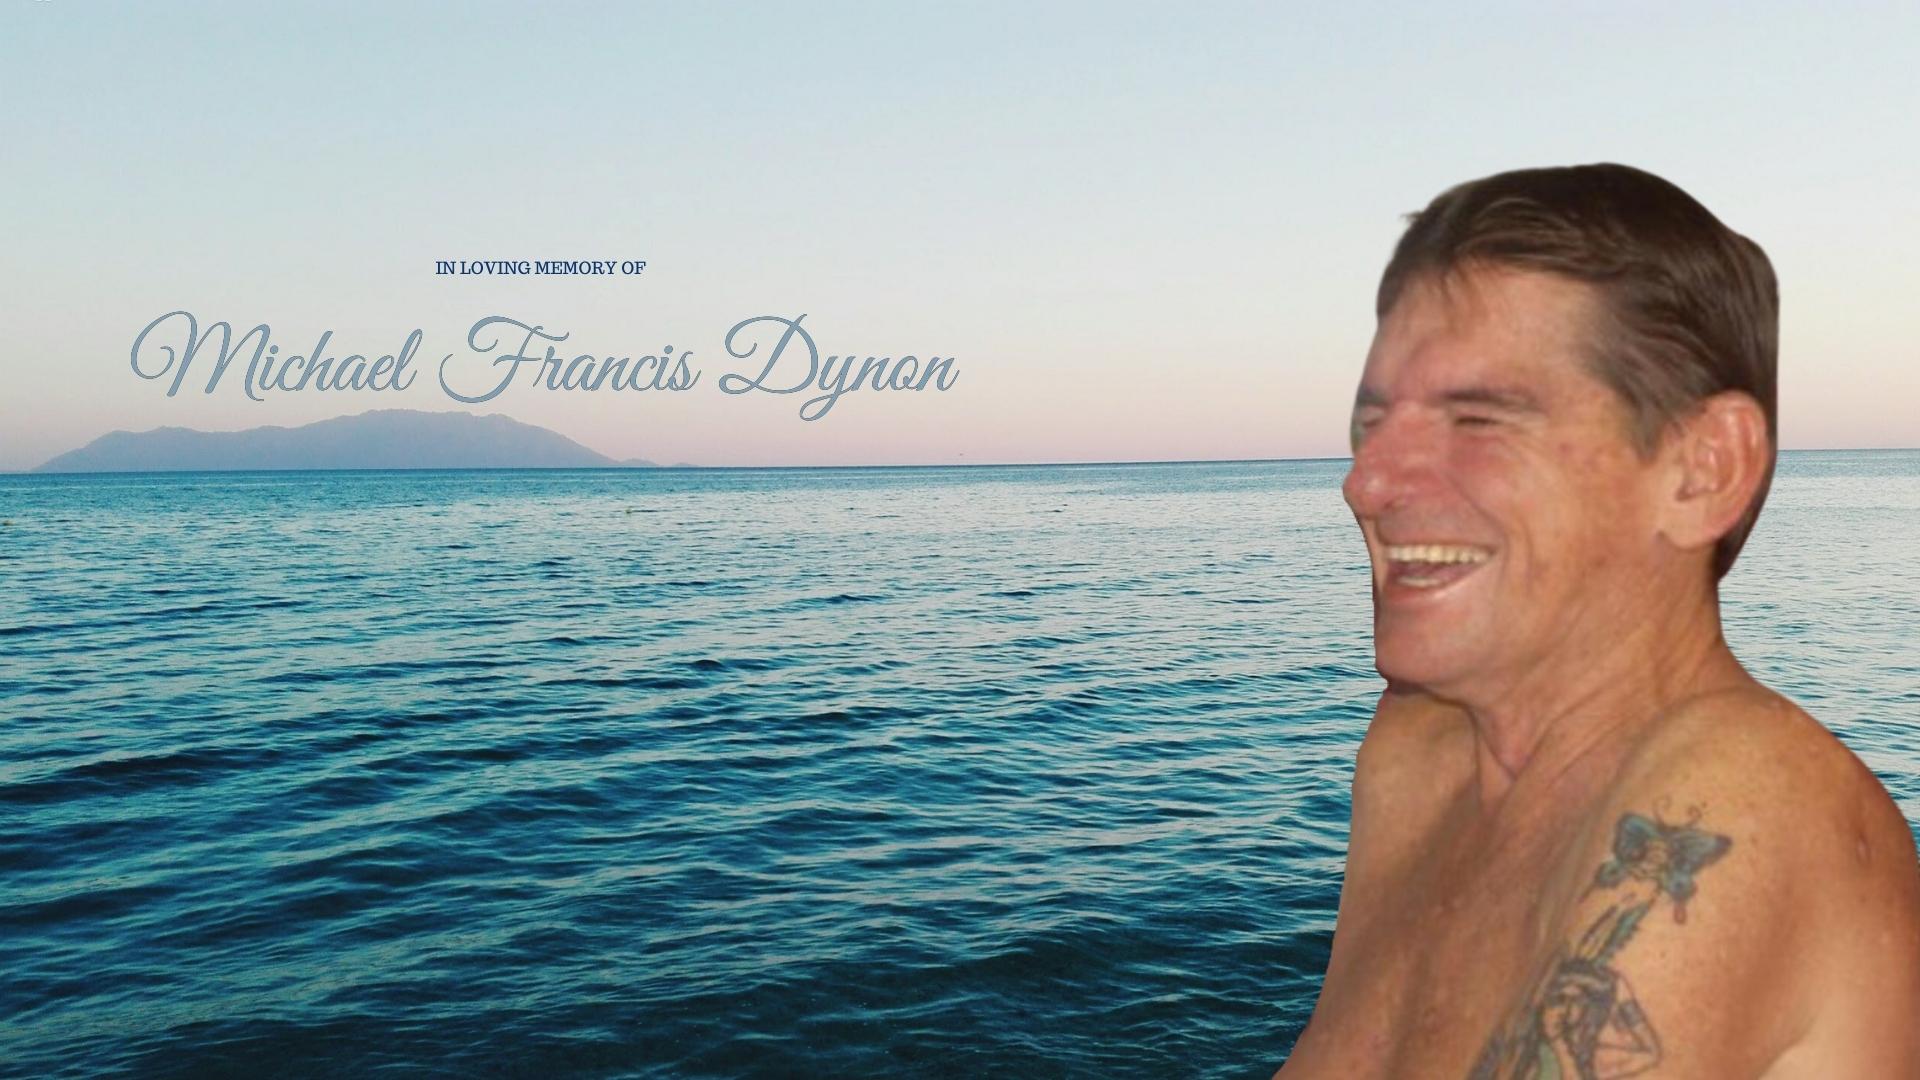 Michael Francis Dynon